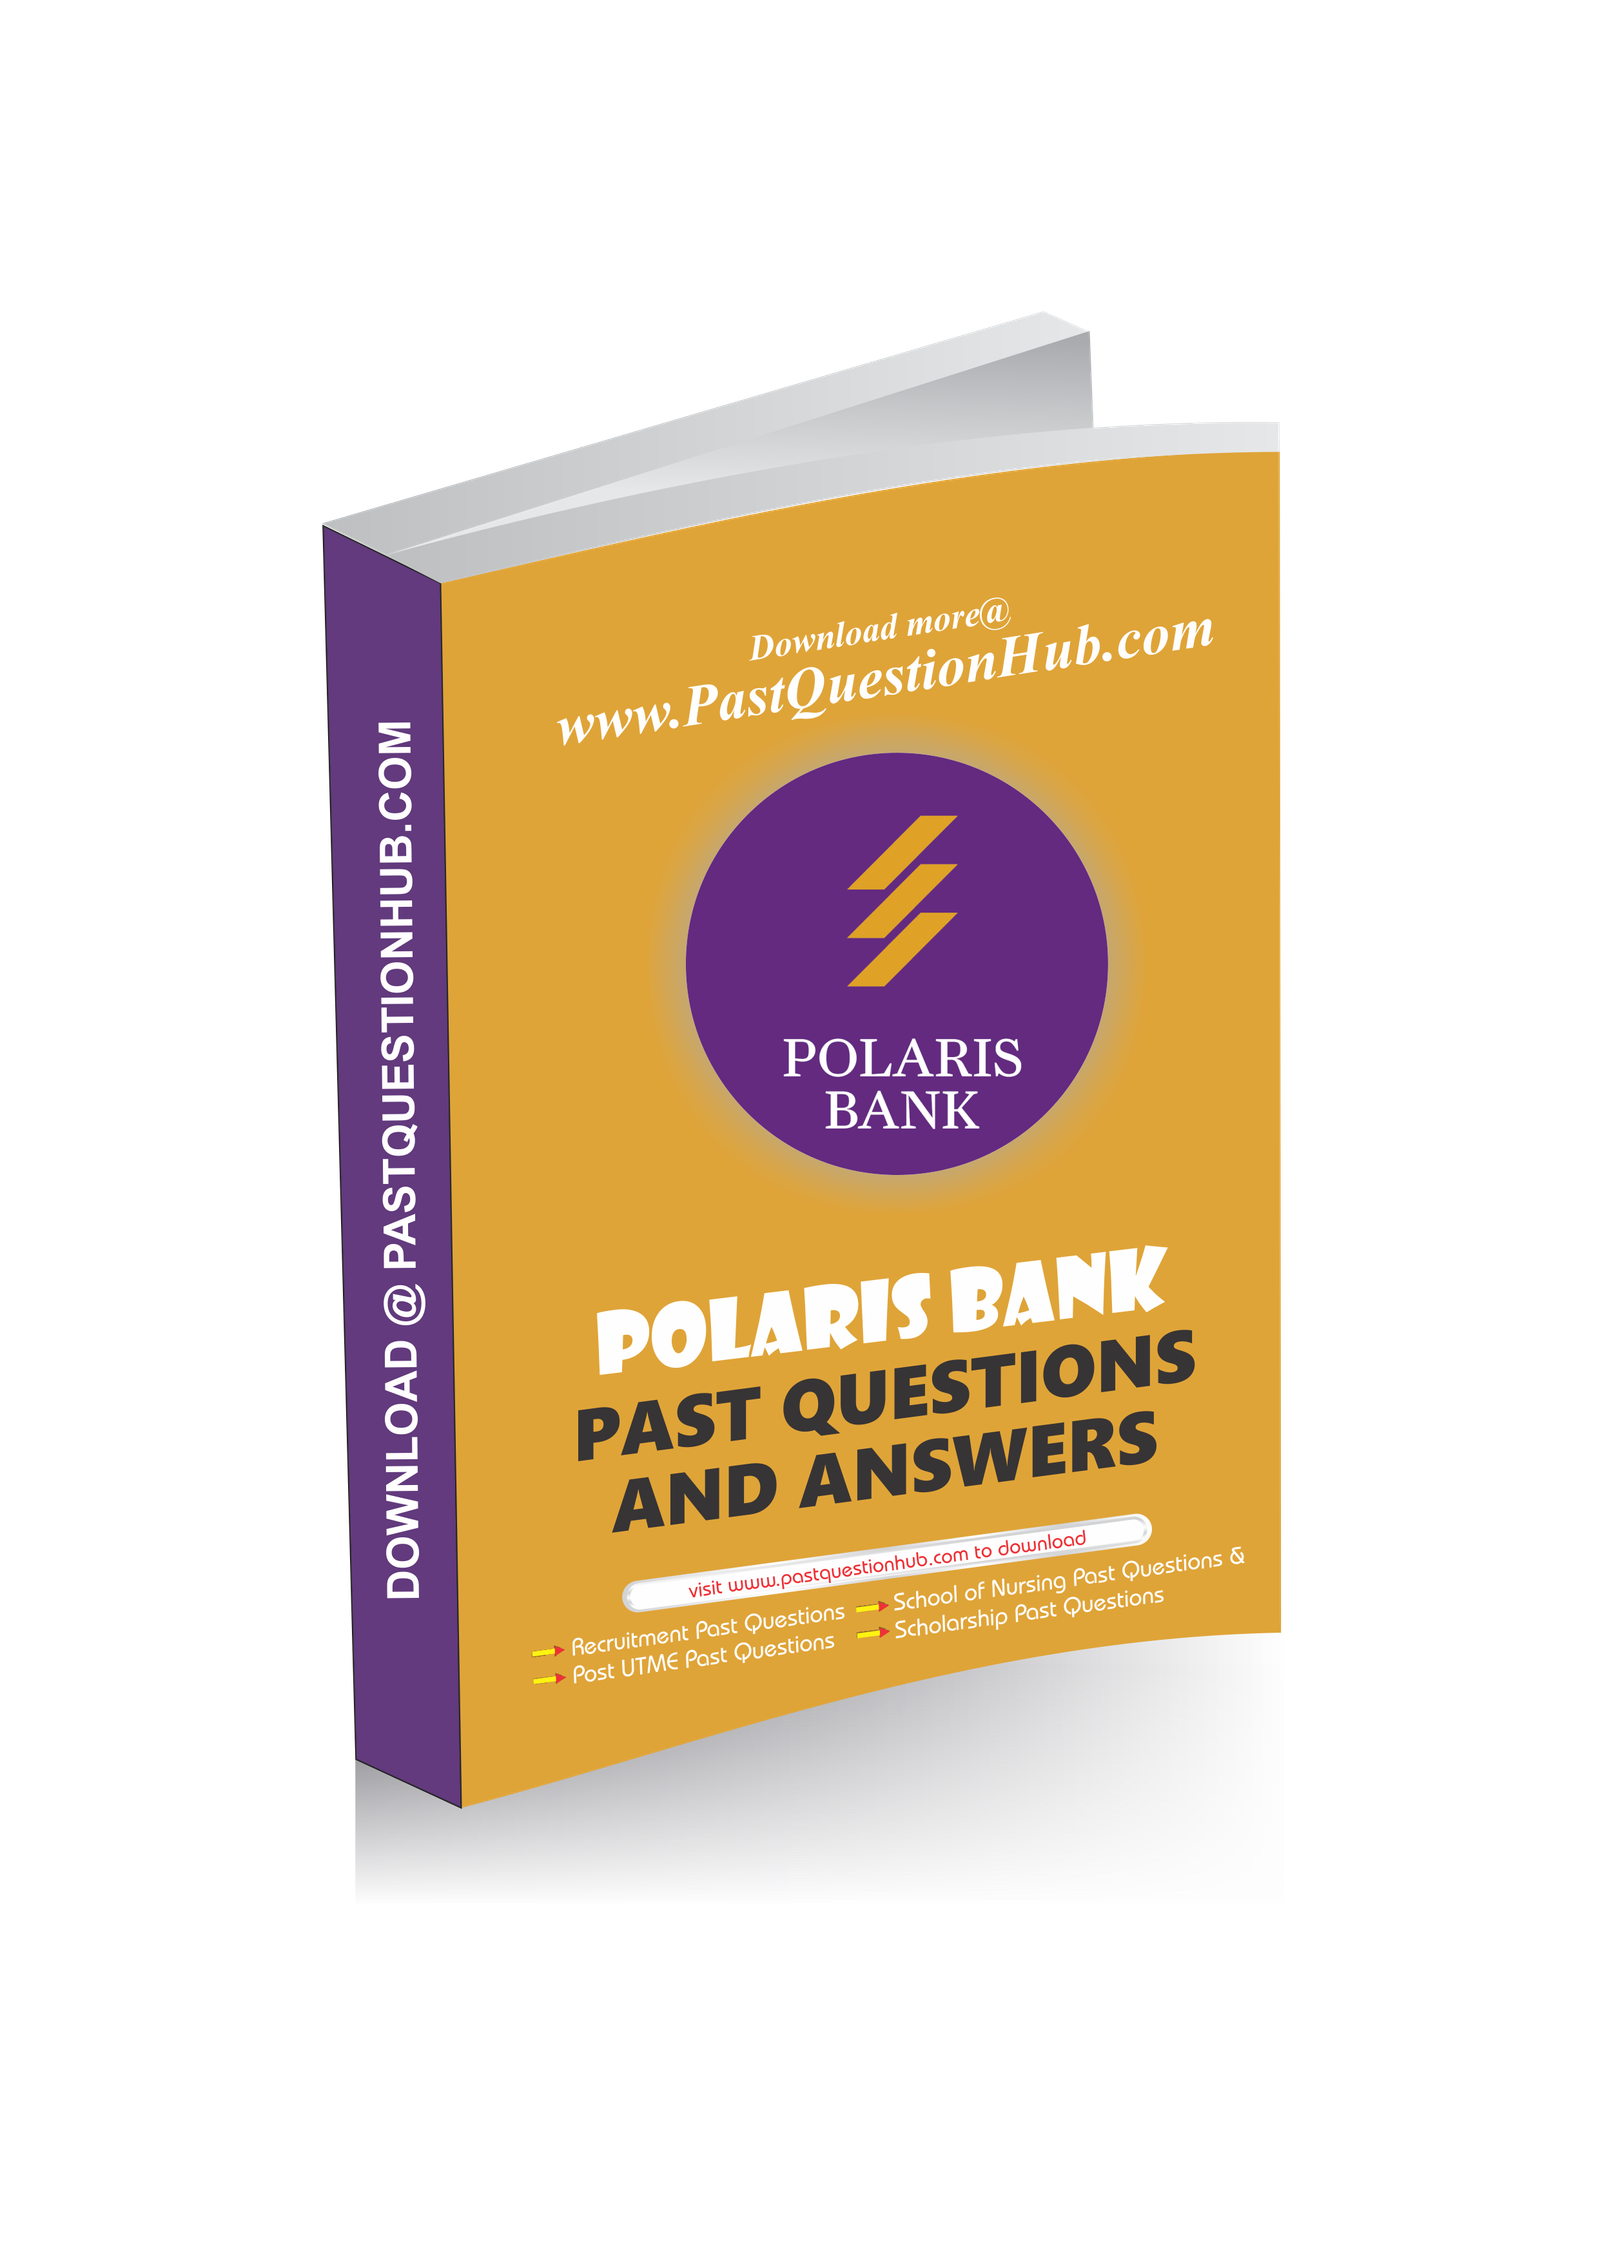 Polaris Bank Past Questions